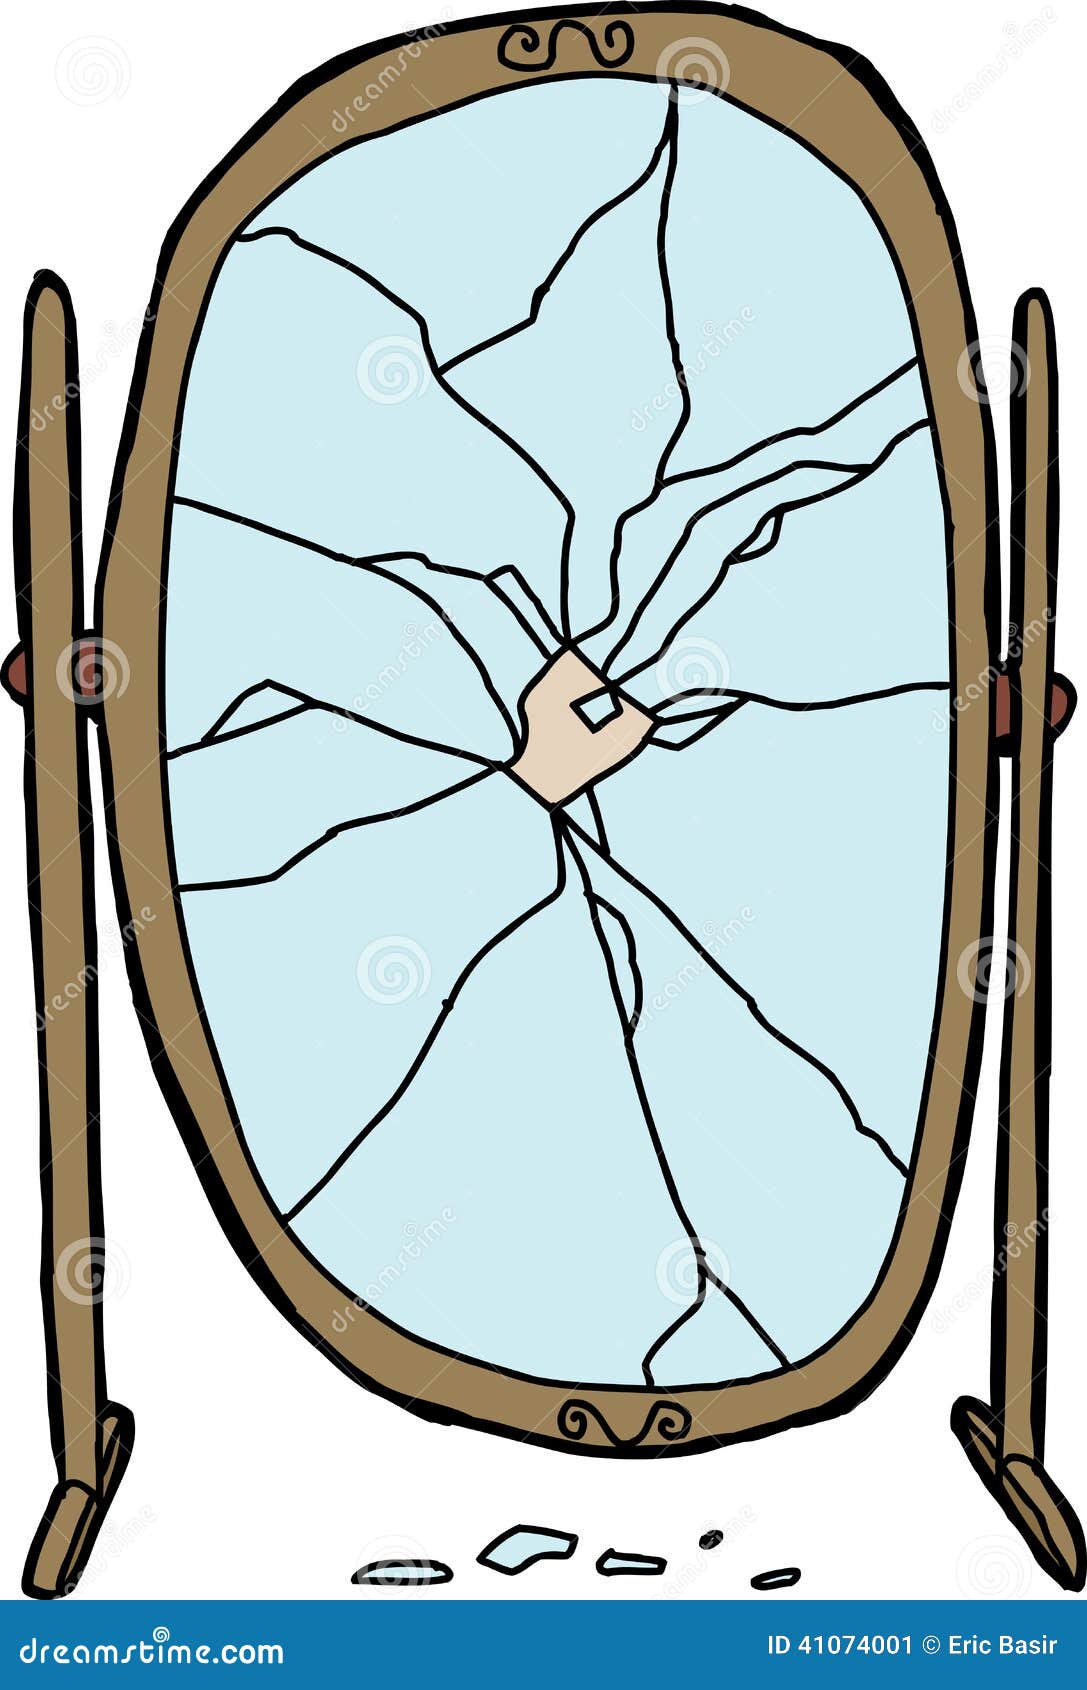 Shattered Mirror stock vector. Illustration of mirror - 41074001